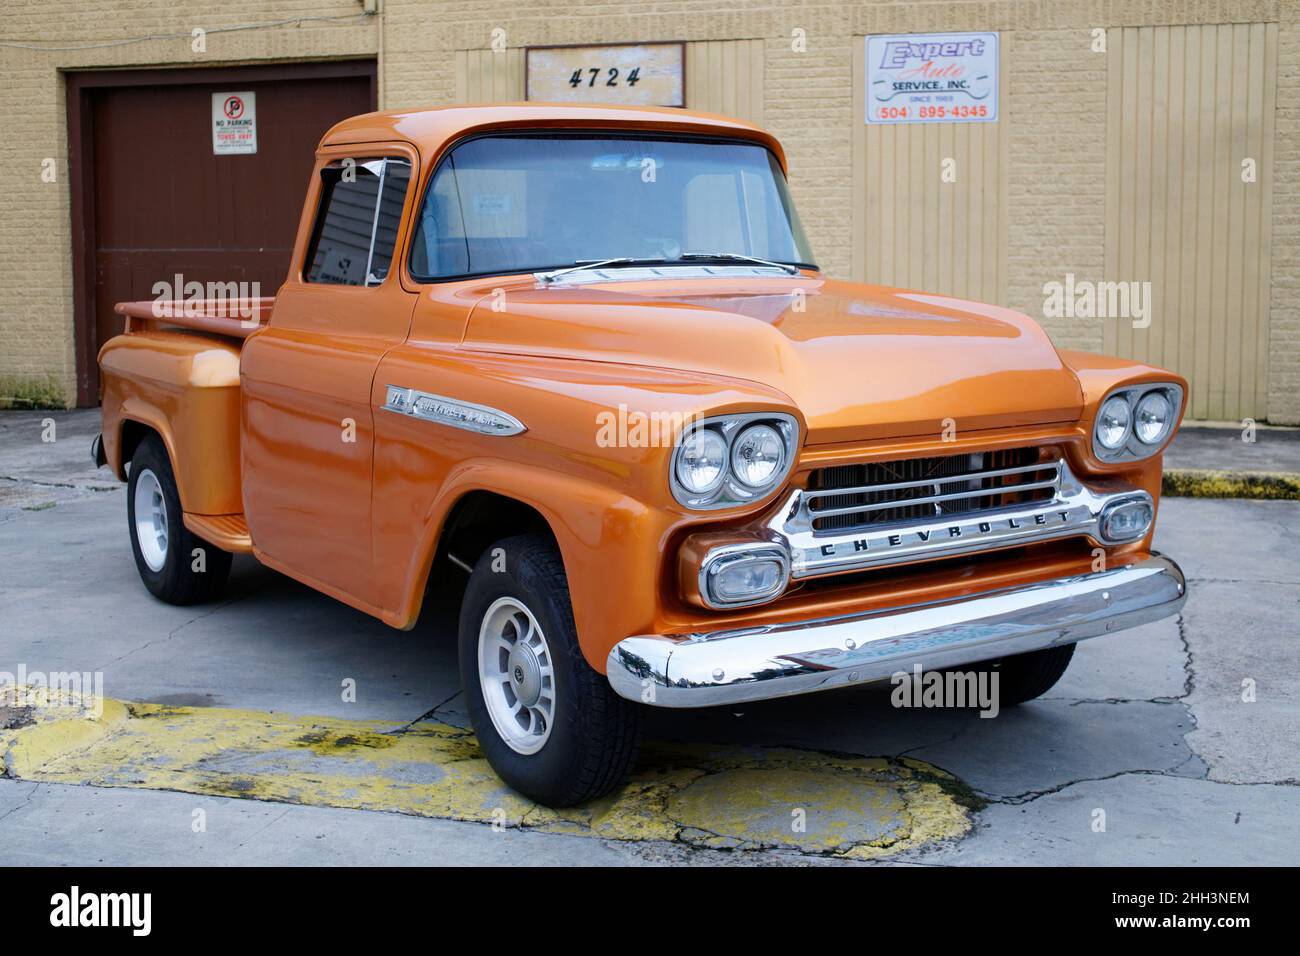 Vintage Car - Orange Chevrolet Pick-Up Stock Photo